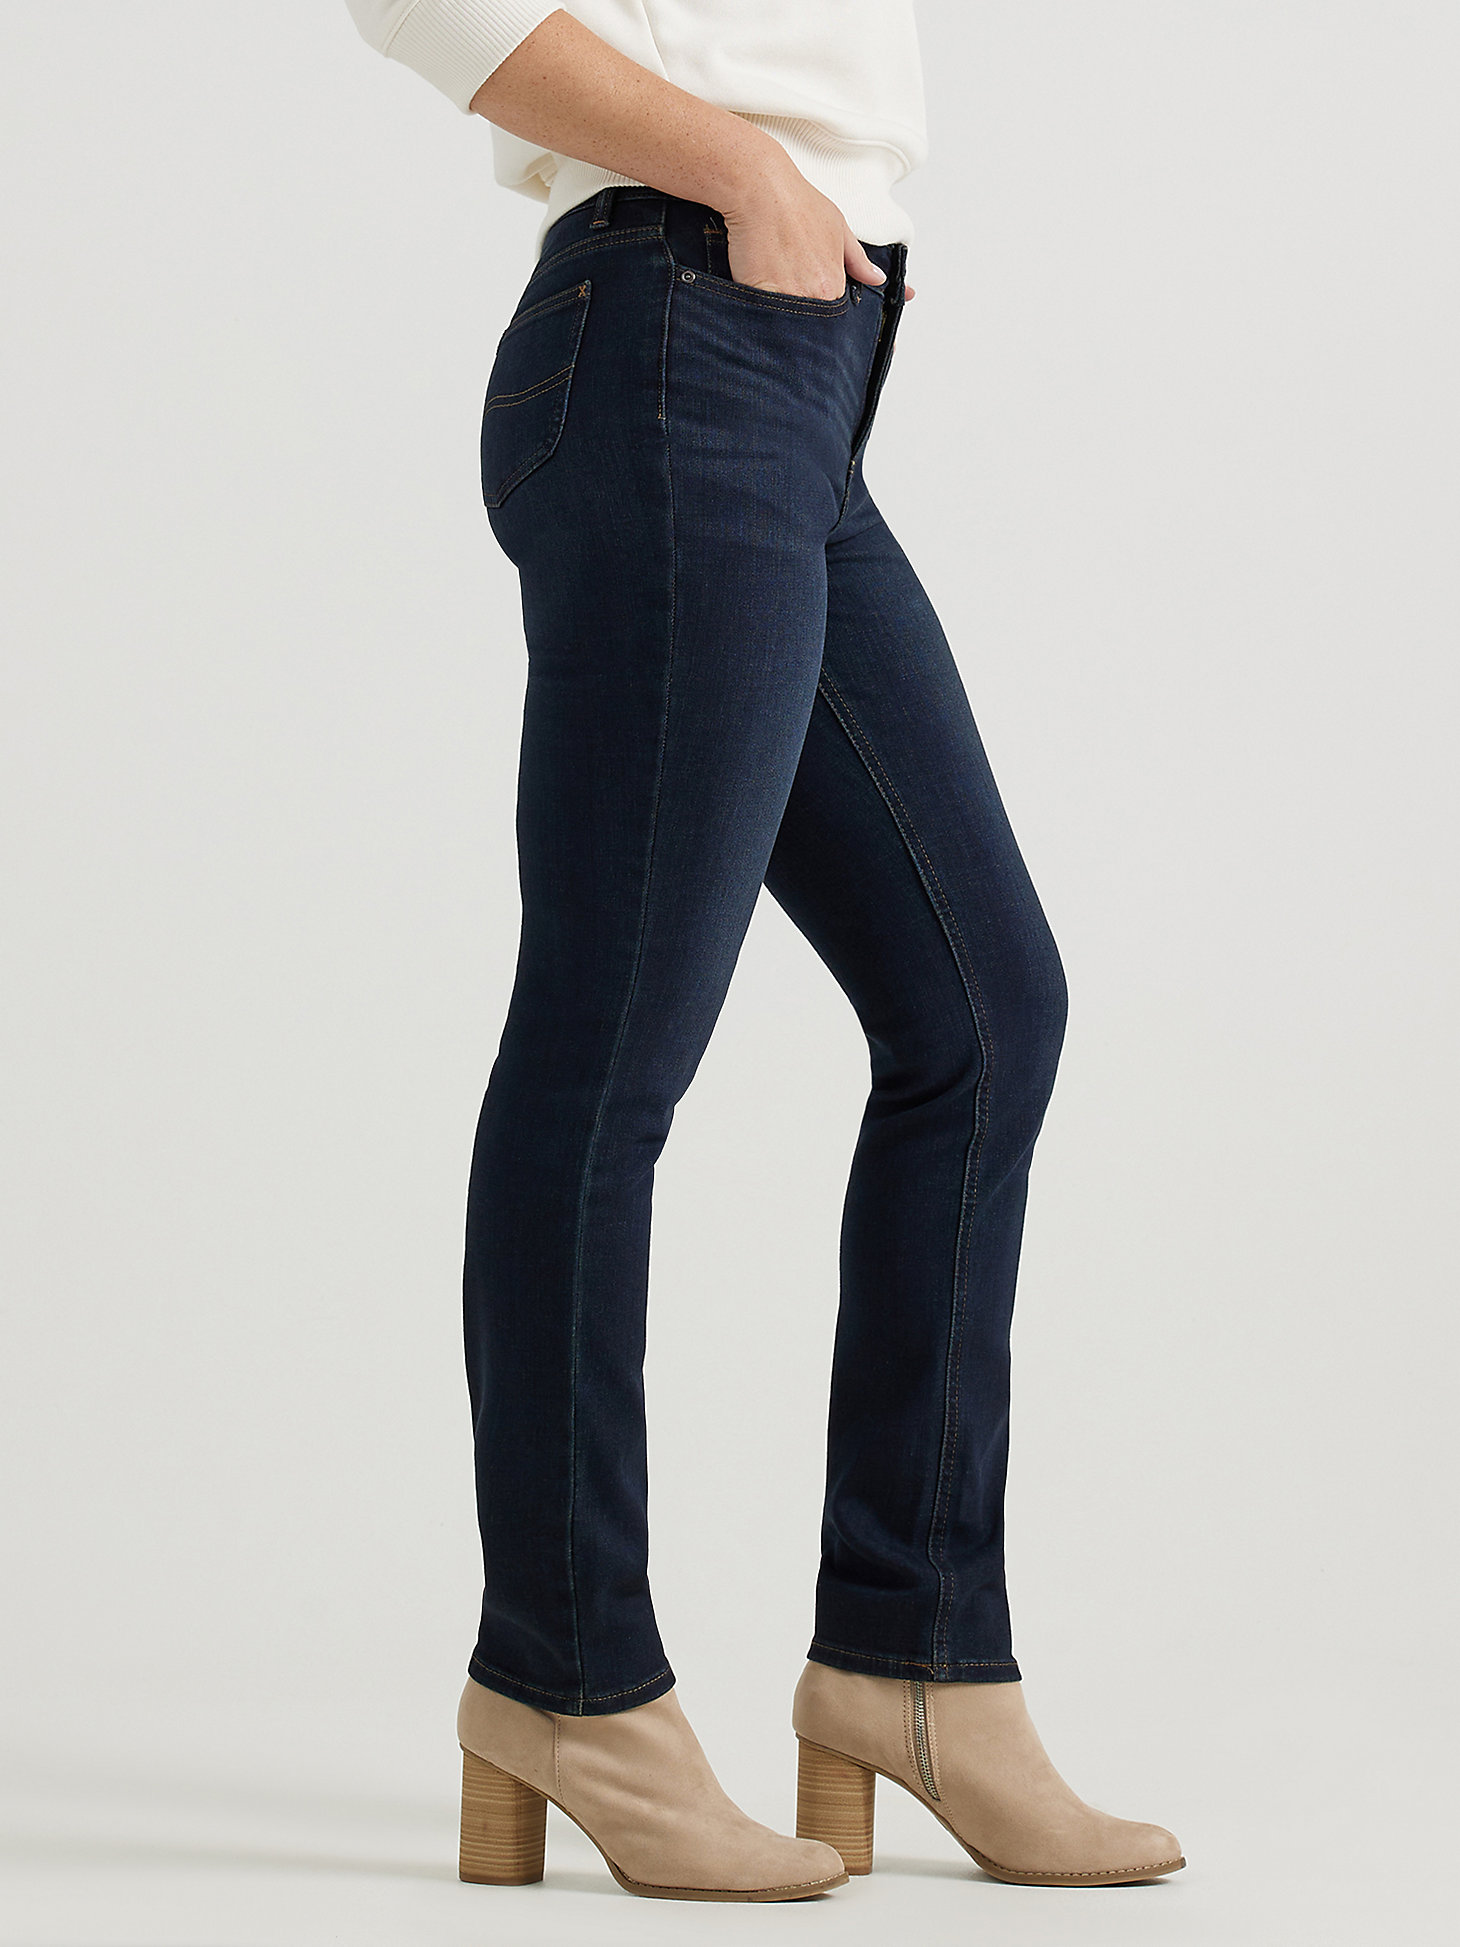 Women's Ultra Lux Comfort Slim Straight Jean in Dark And Hazy alternative view 3